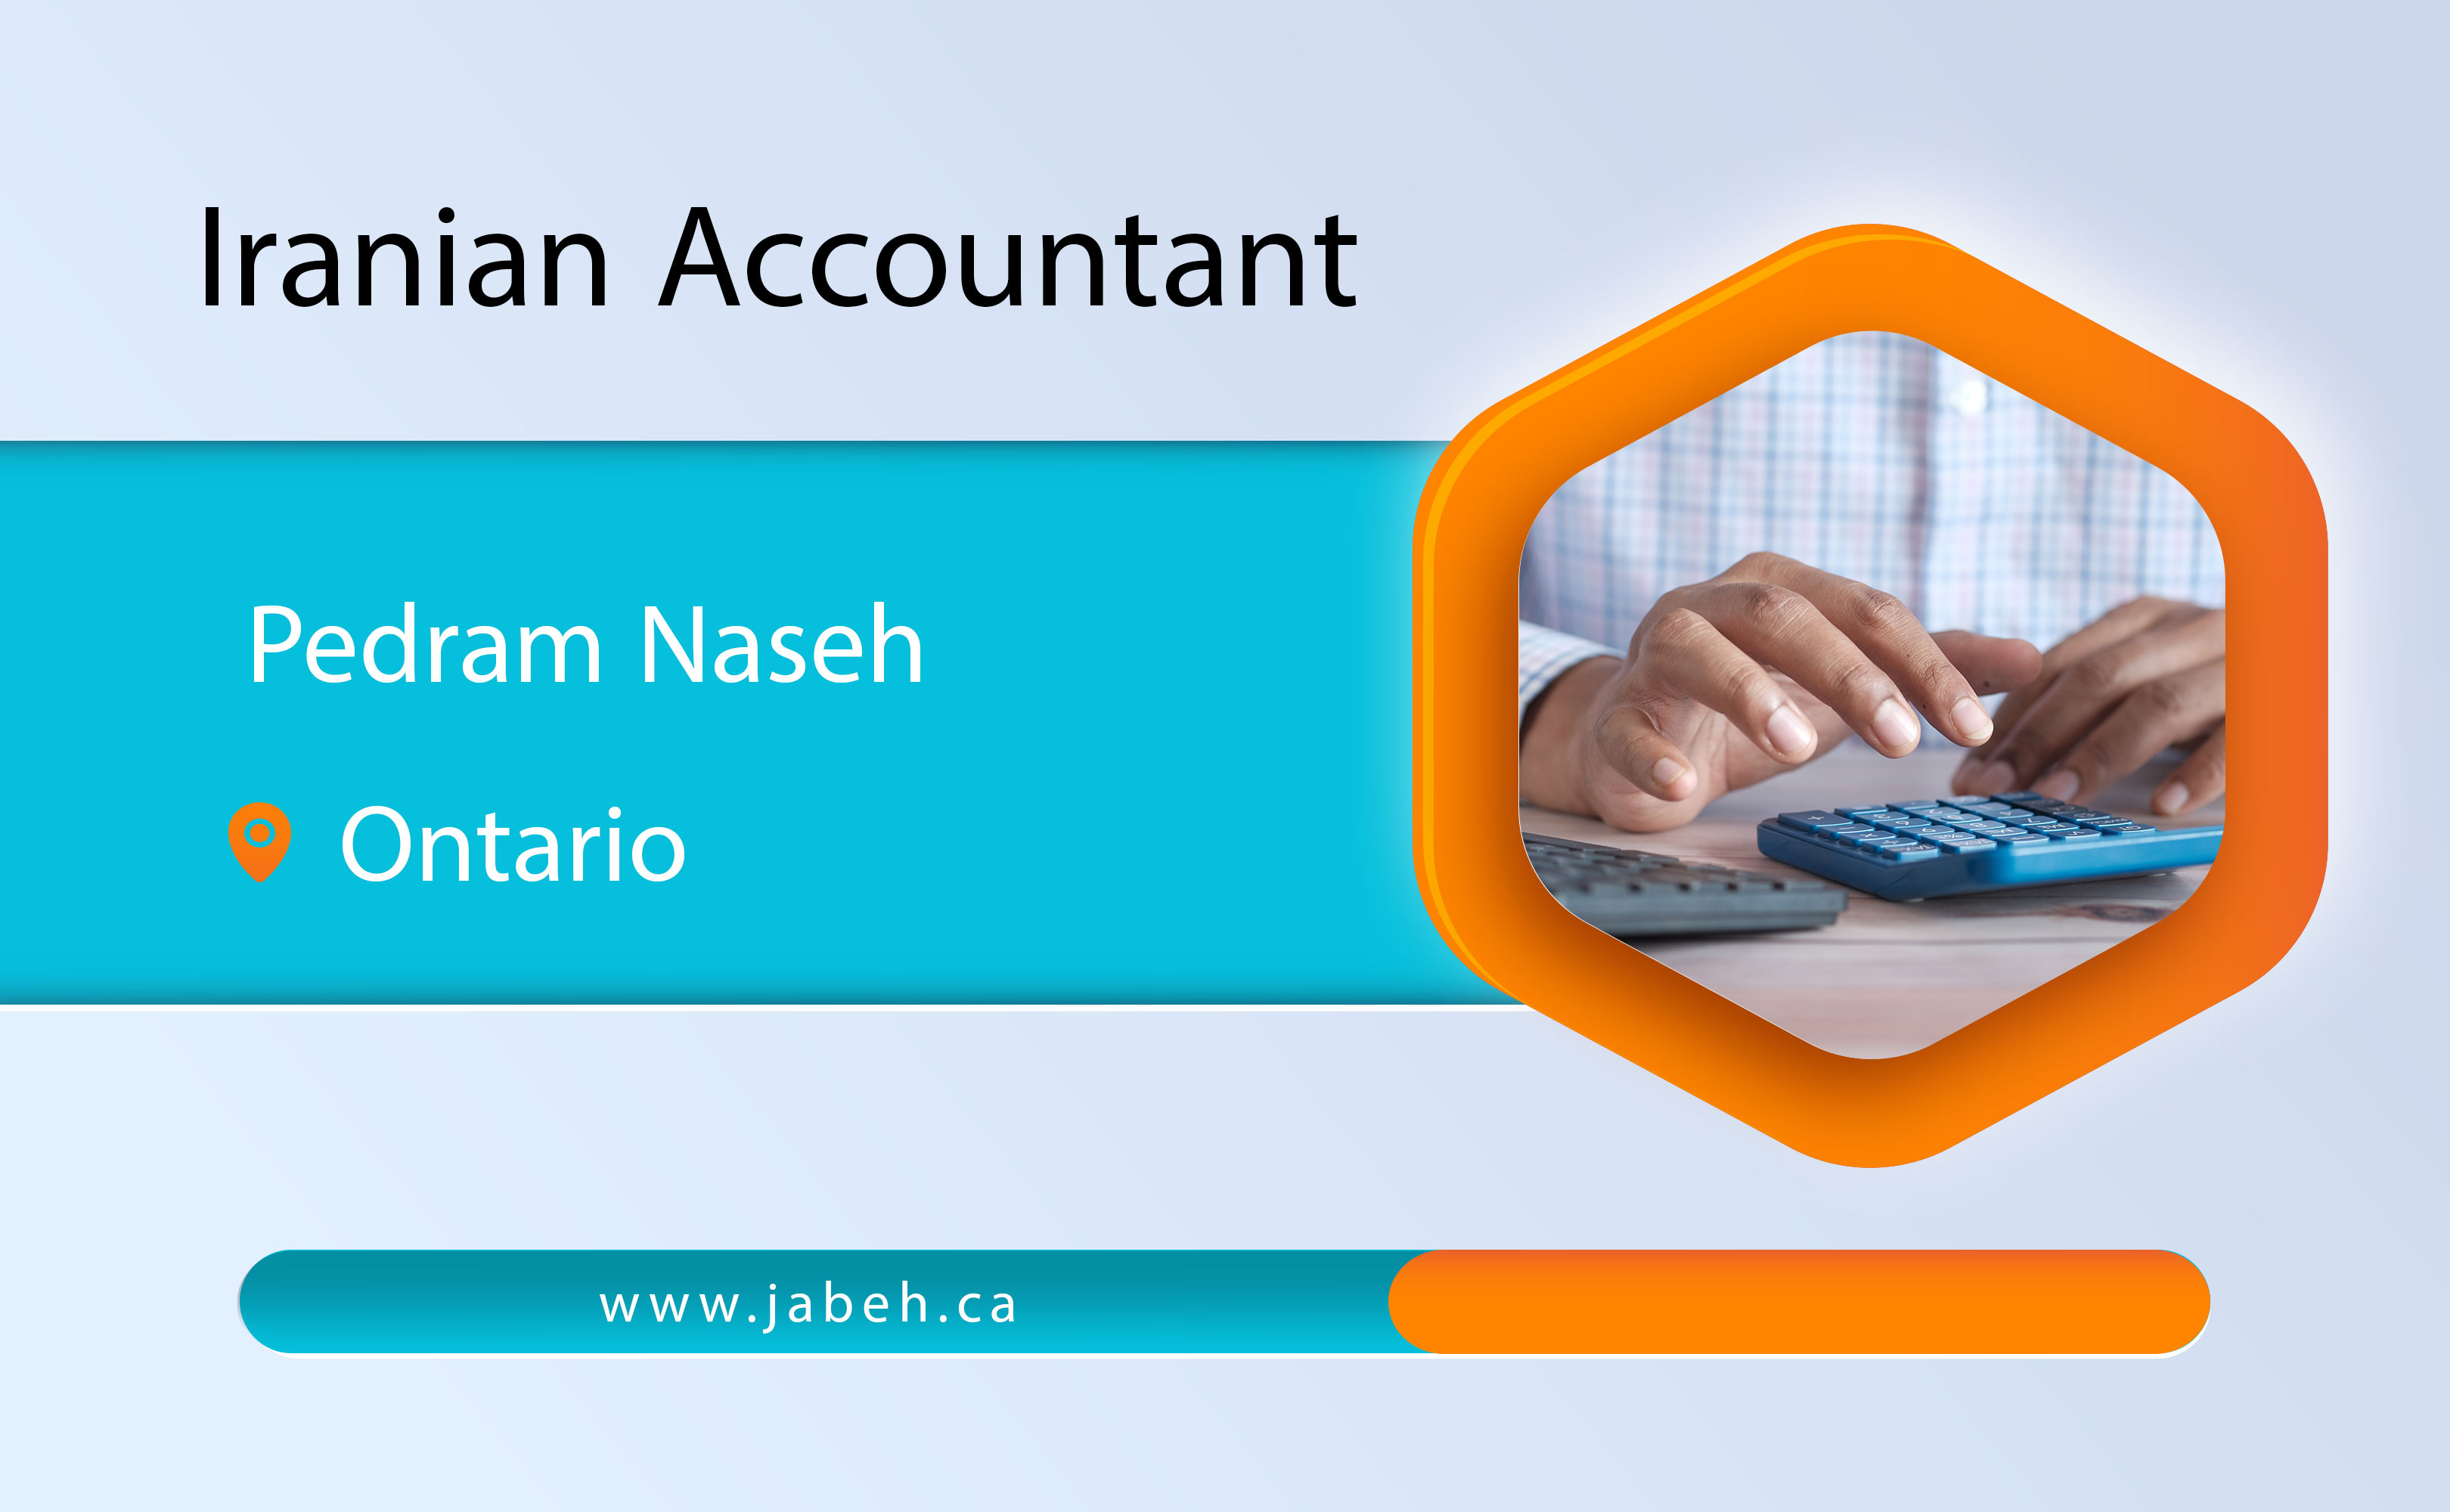 Pedram Naseh's Iranian accounting in Ontario